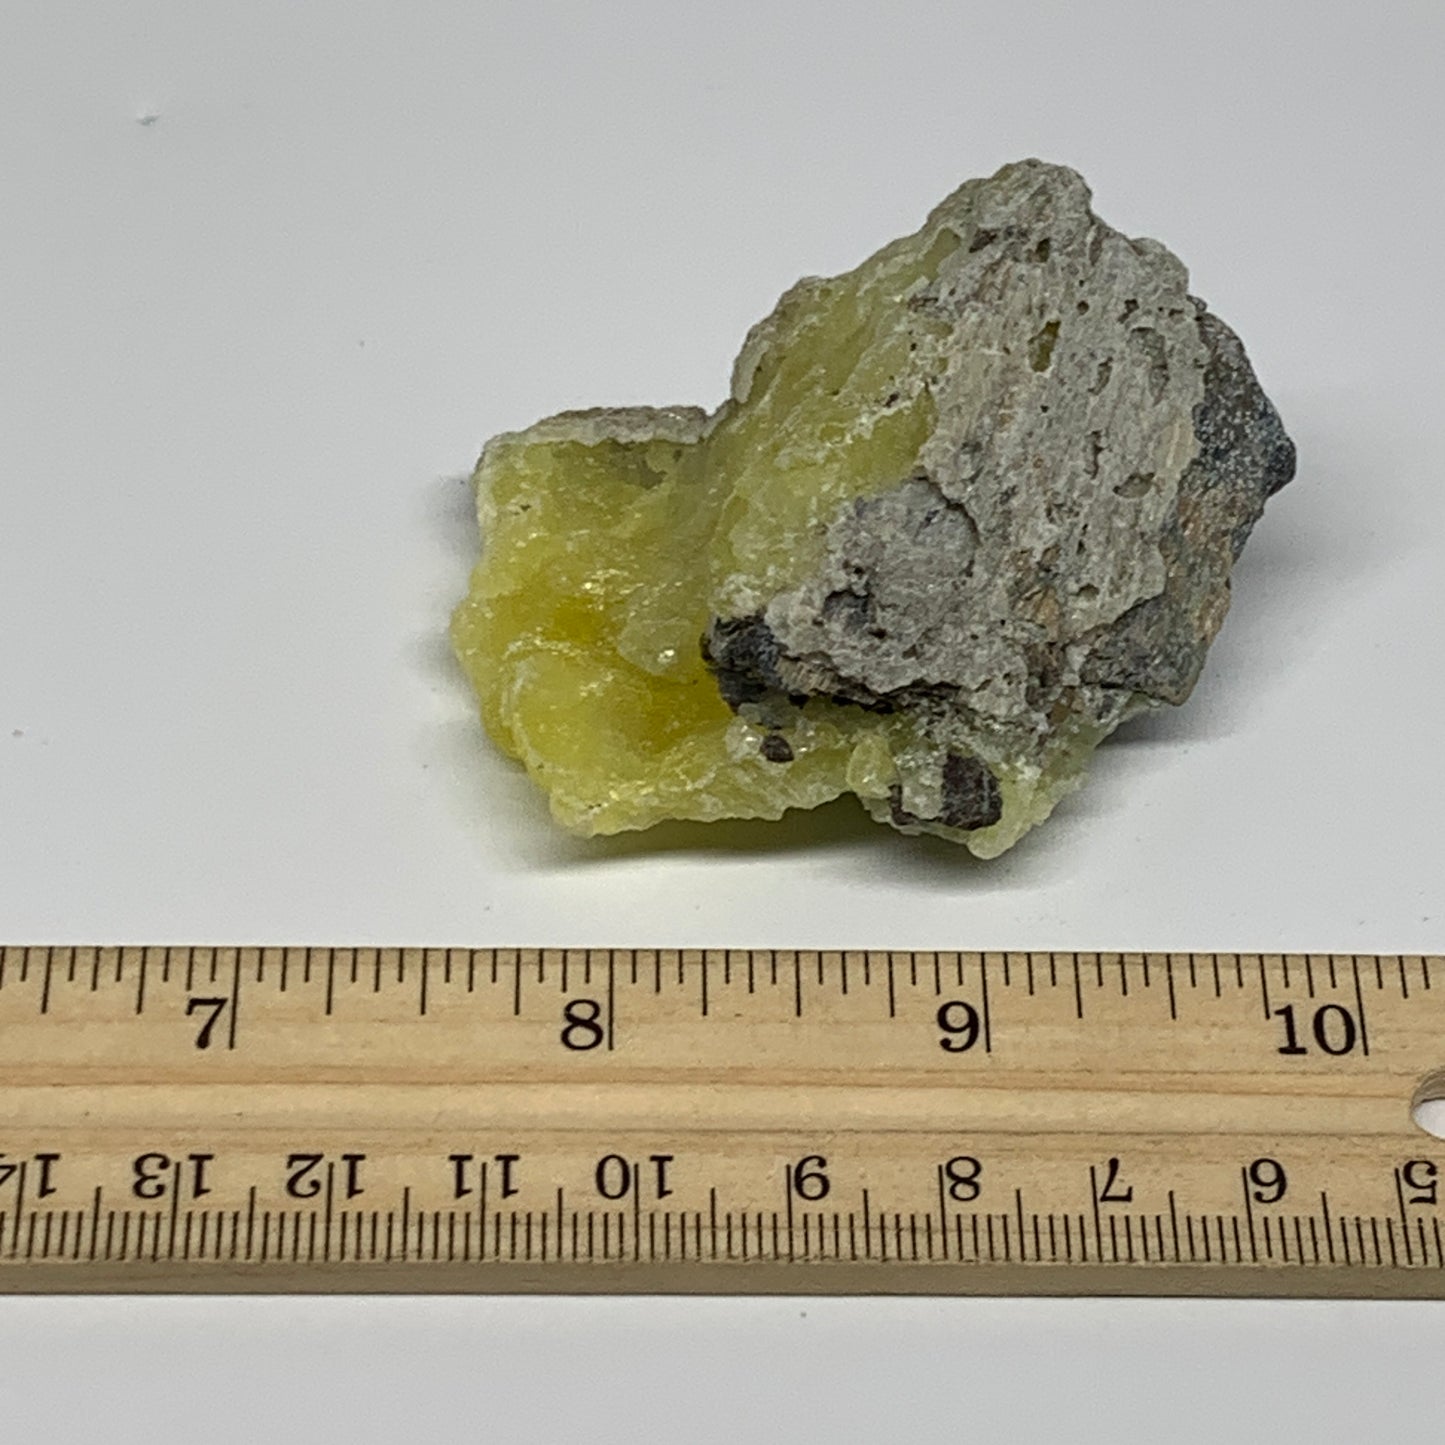 55g, 2.4"x1.6"x1.3", Rough Brucite Crystal Mineral Specimens @Pakistan, B27379